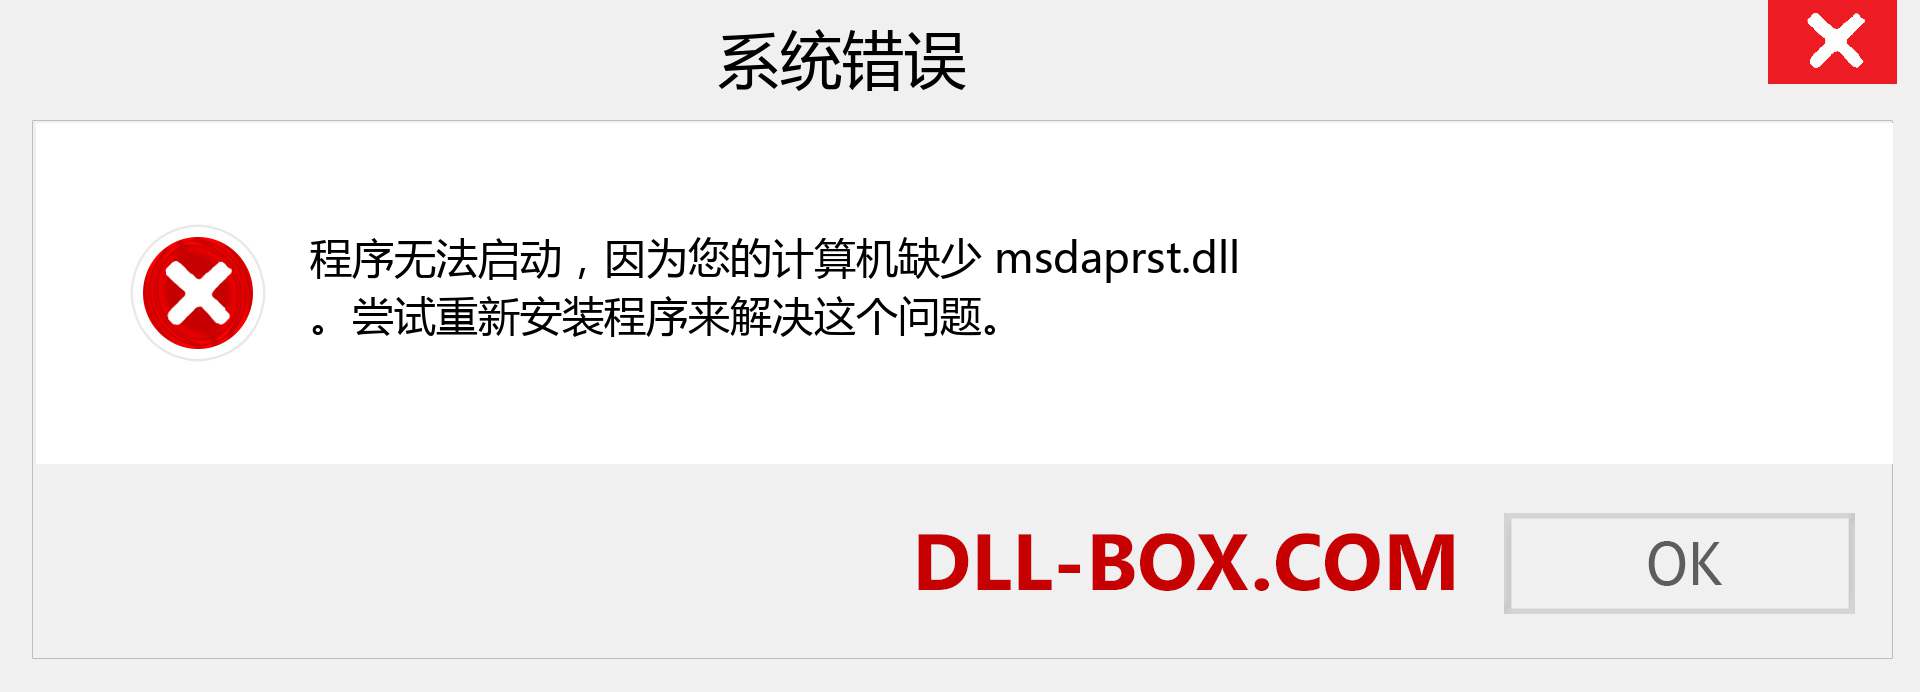 msdaprst.dll 文件丢失？。 适用于 Windows 7、8、10 的下载 - 修复 Windows、照片、图像上的 msdaprst dll 丢失错误